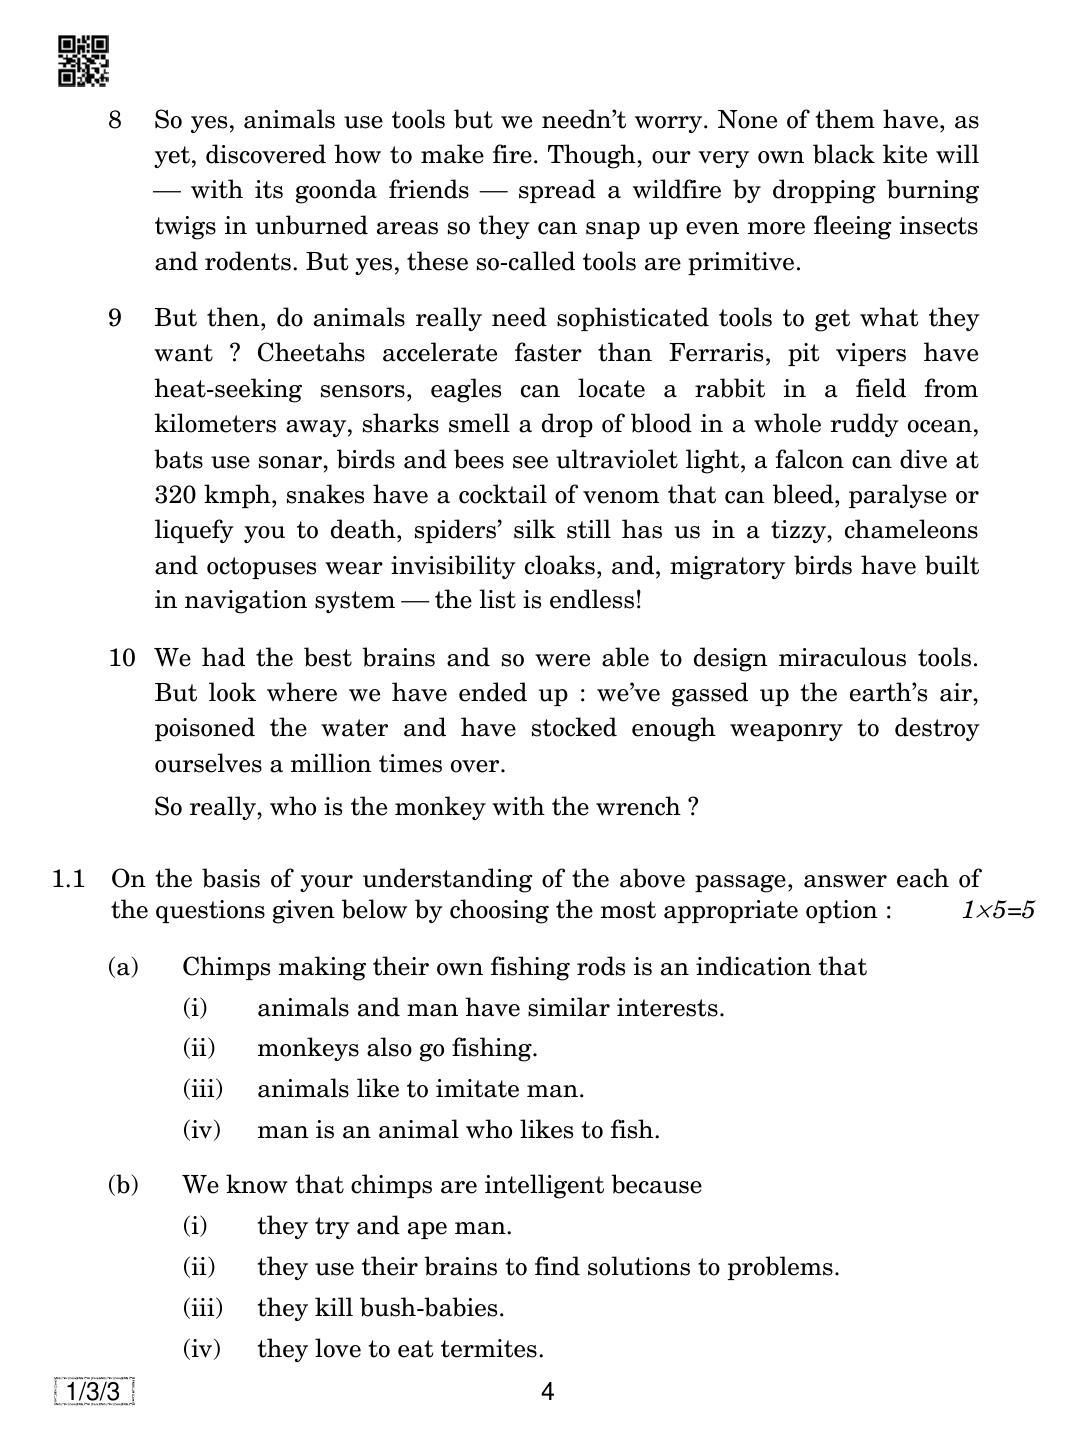 CBSE Class 12 1-3-3 English Core 2019 Question Paper - Page 4